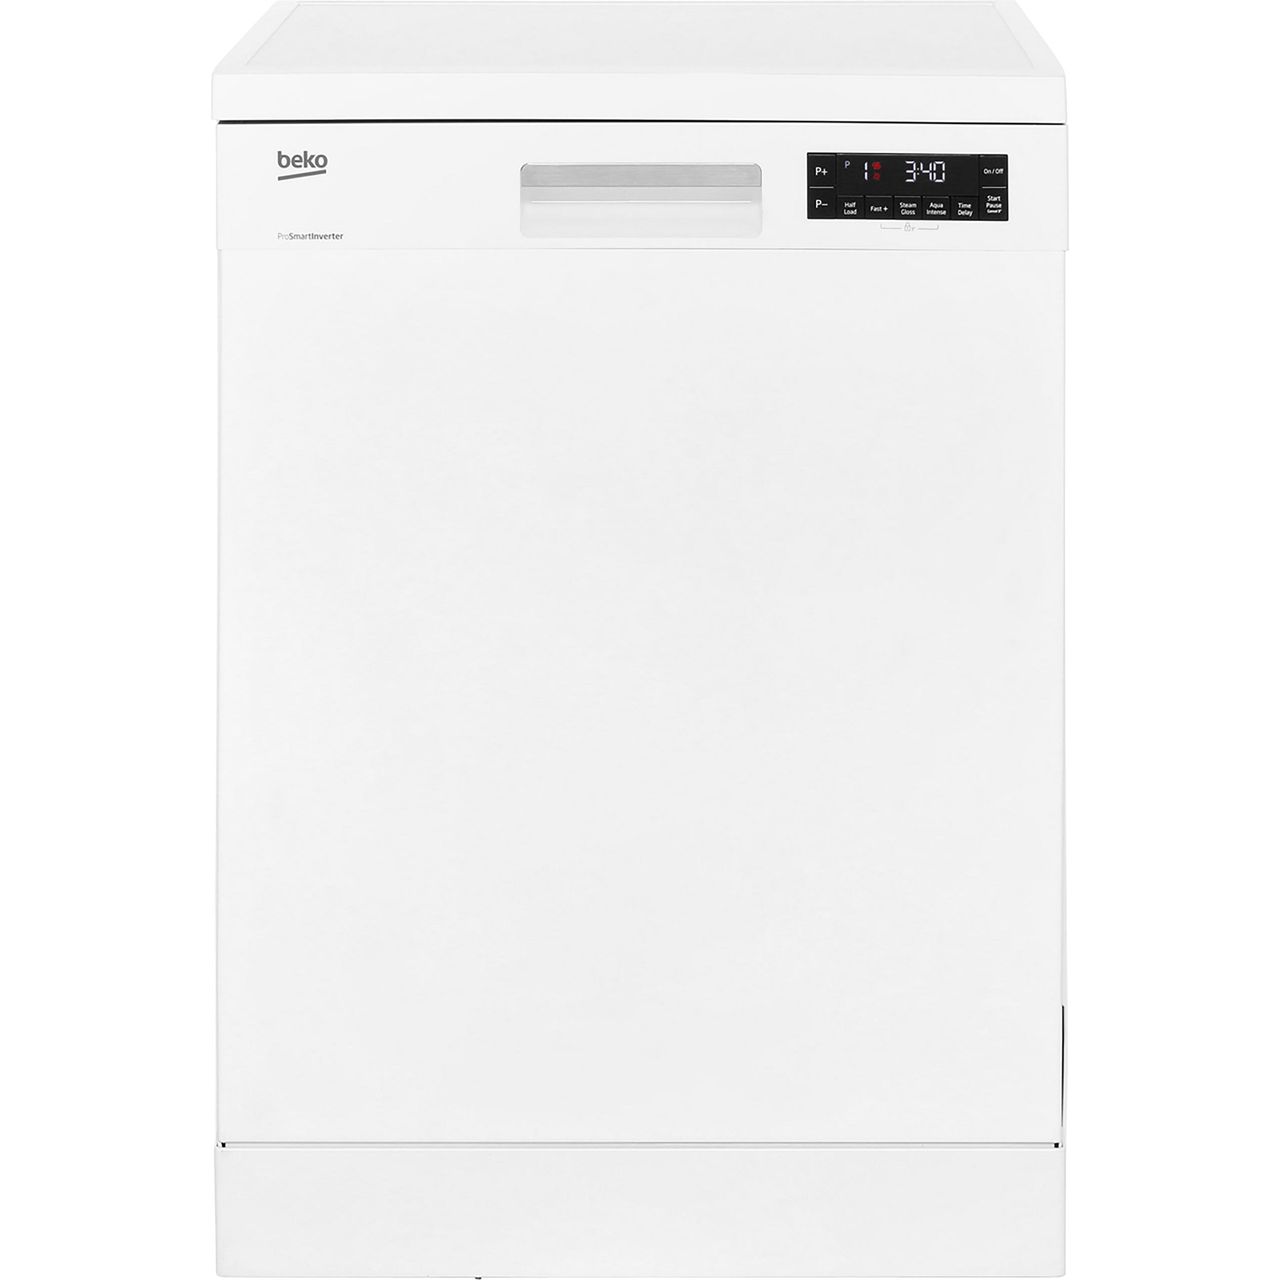 Beko DFN28R22W Standard Dishwasher Review